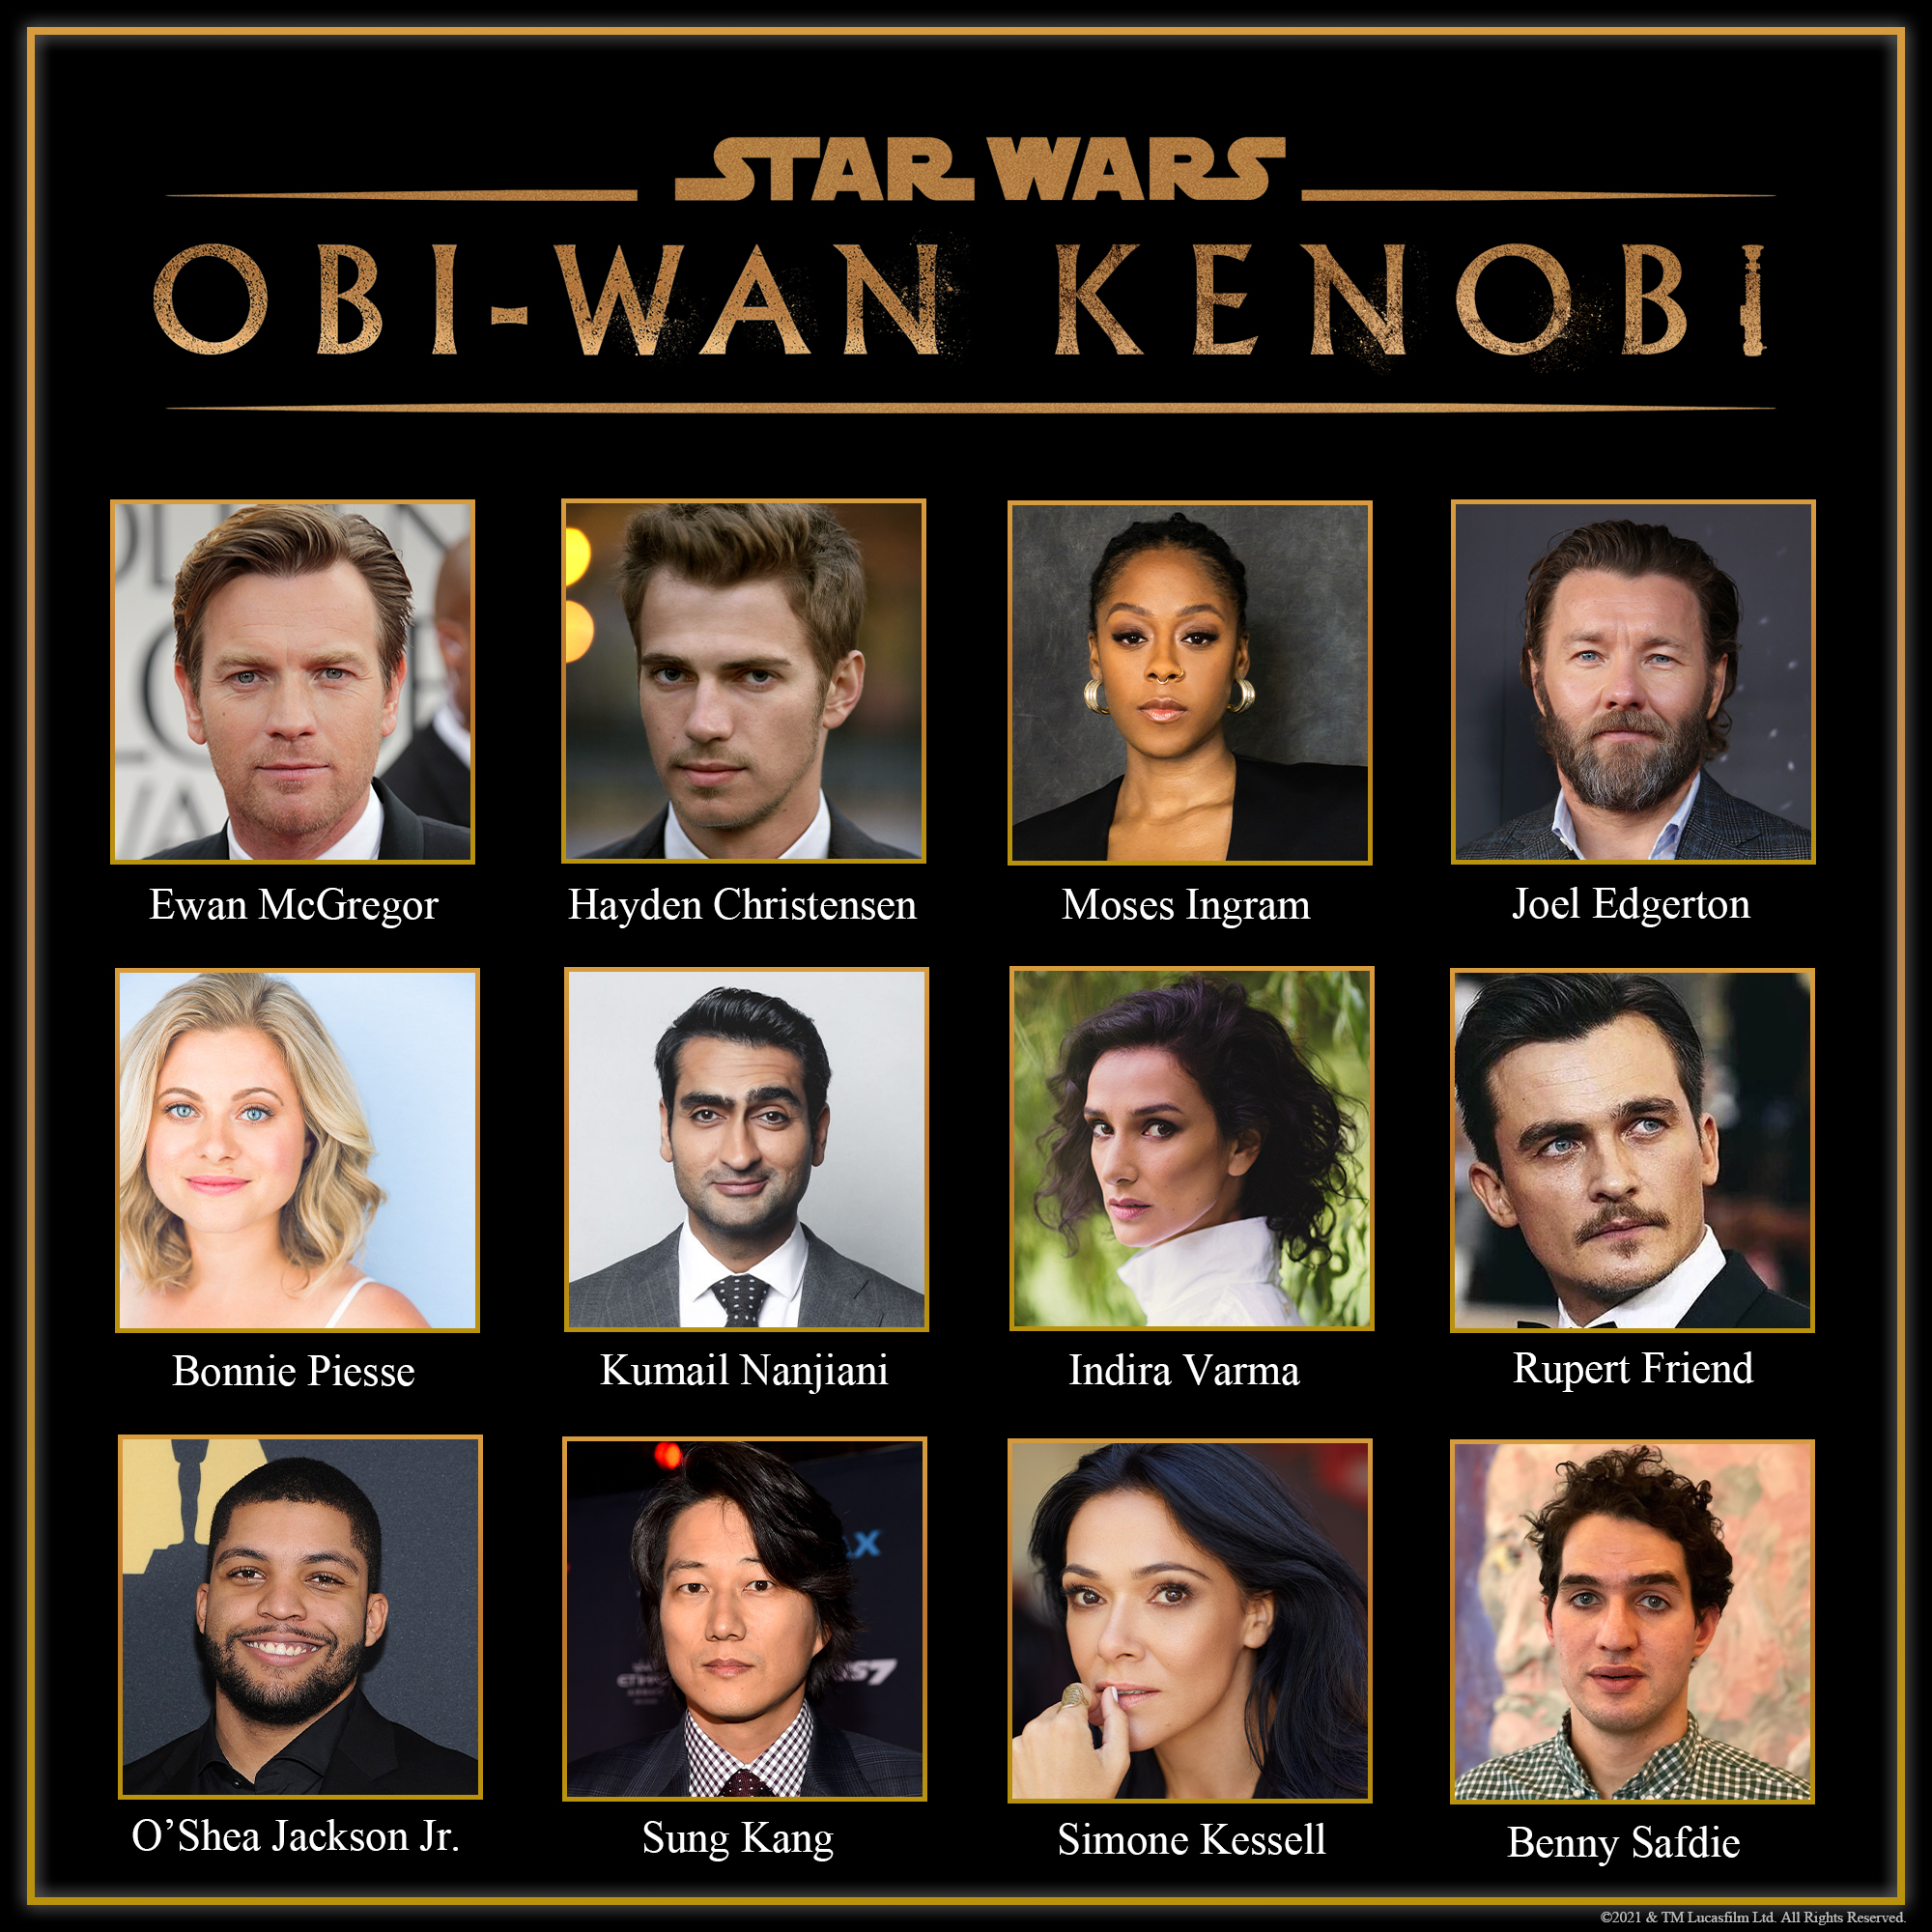 Obi-Wan Kenobi Actor On His Excitement At Landing The Gig